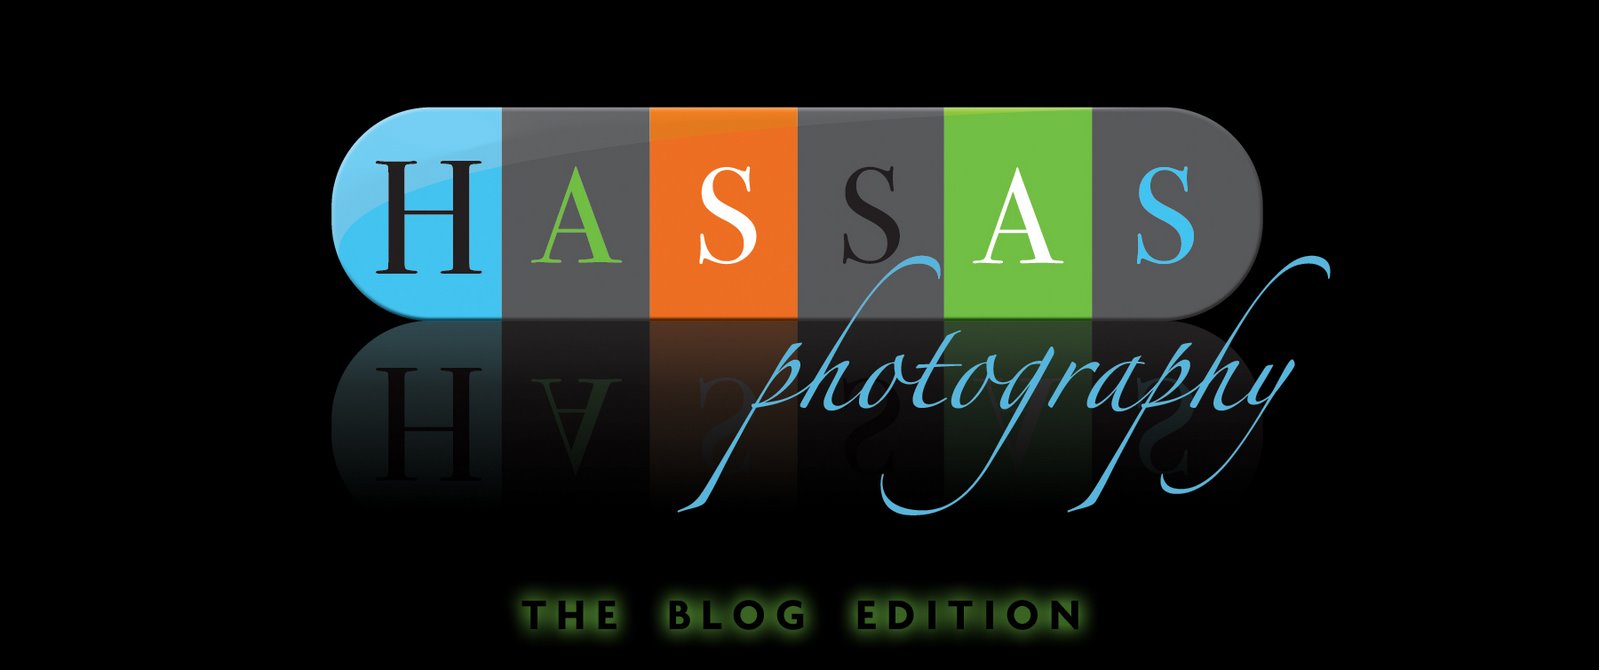 Hassas Photography Blog